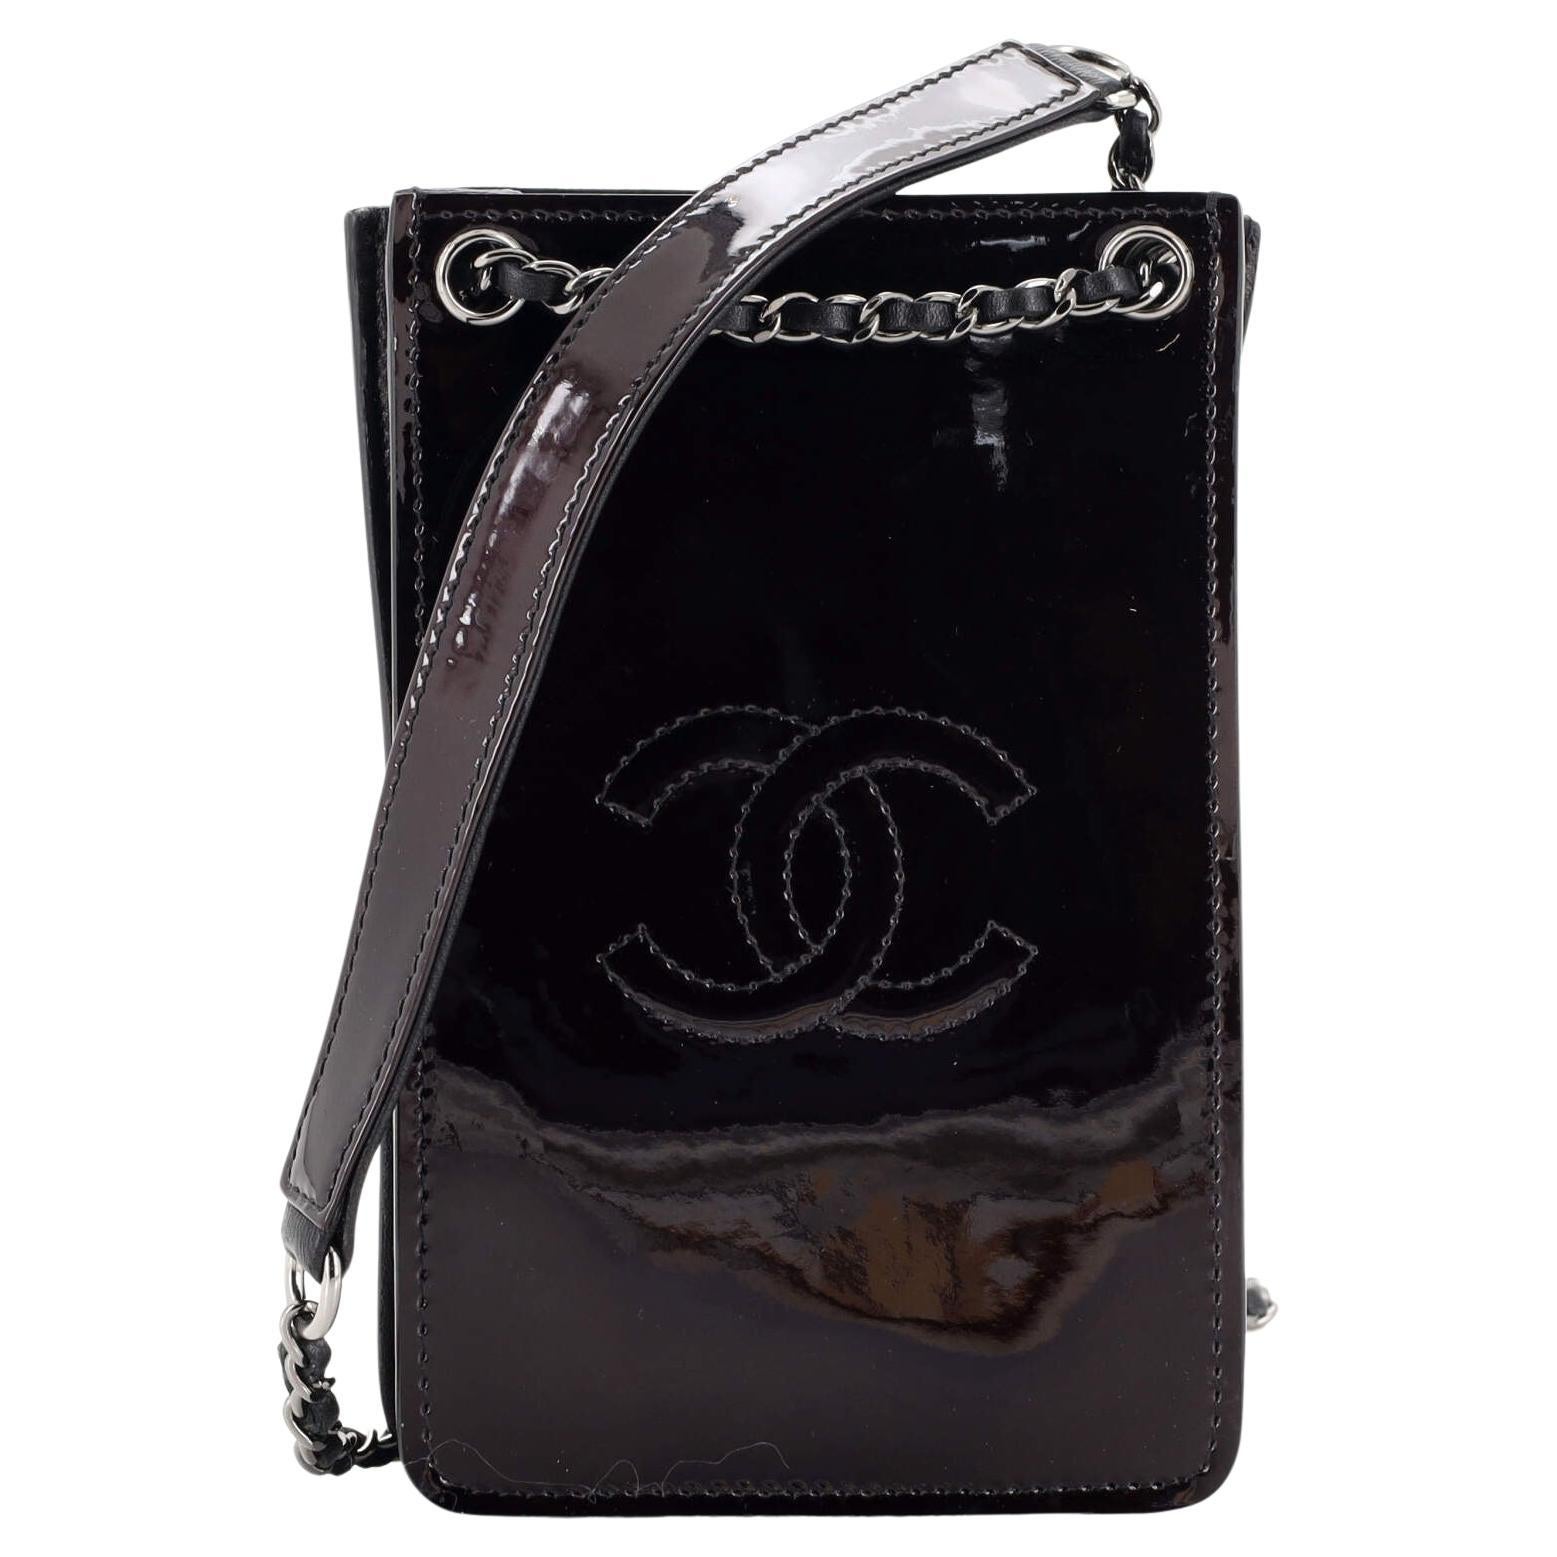 Chanel CC Phone Holder Crossbody Bag Patent